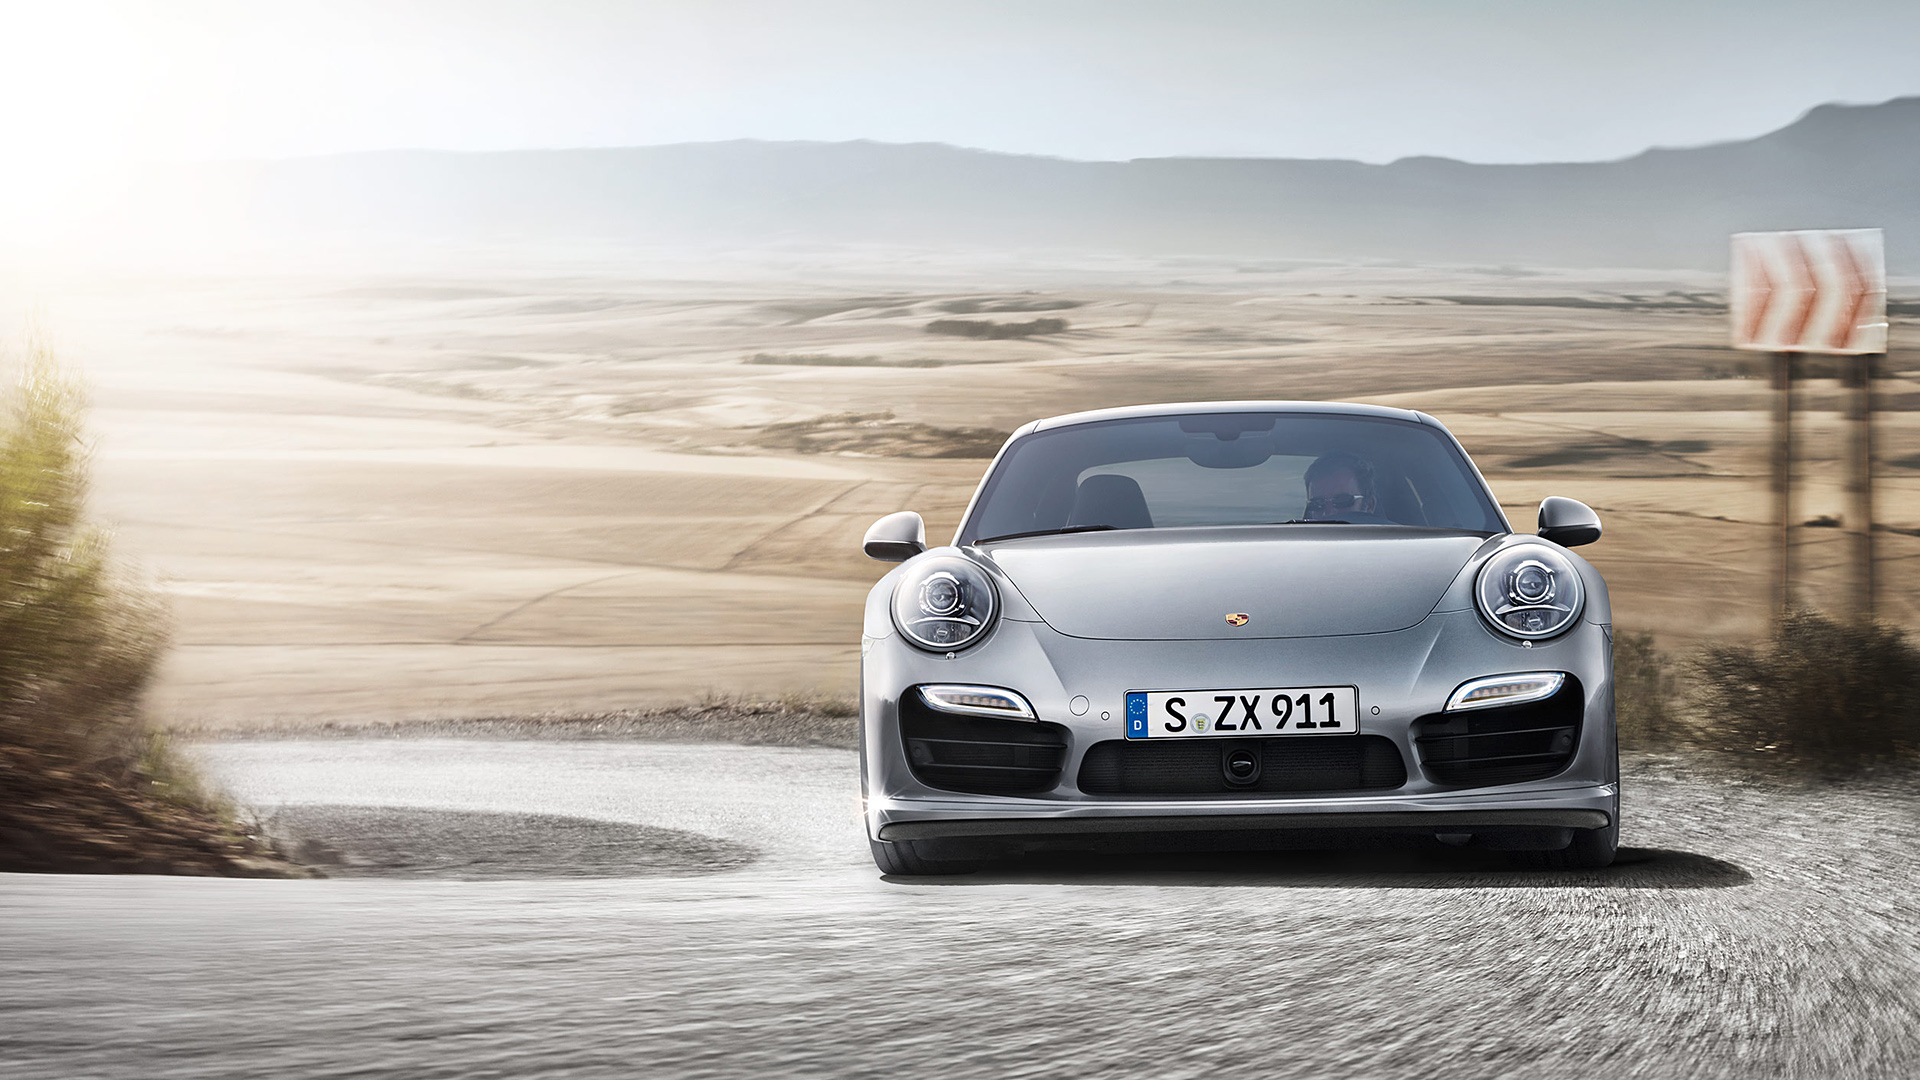  2014 Porsche 911 Turbo Wallpaper.